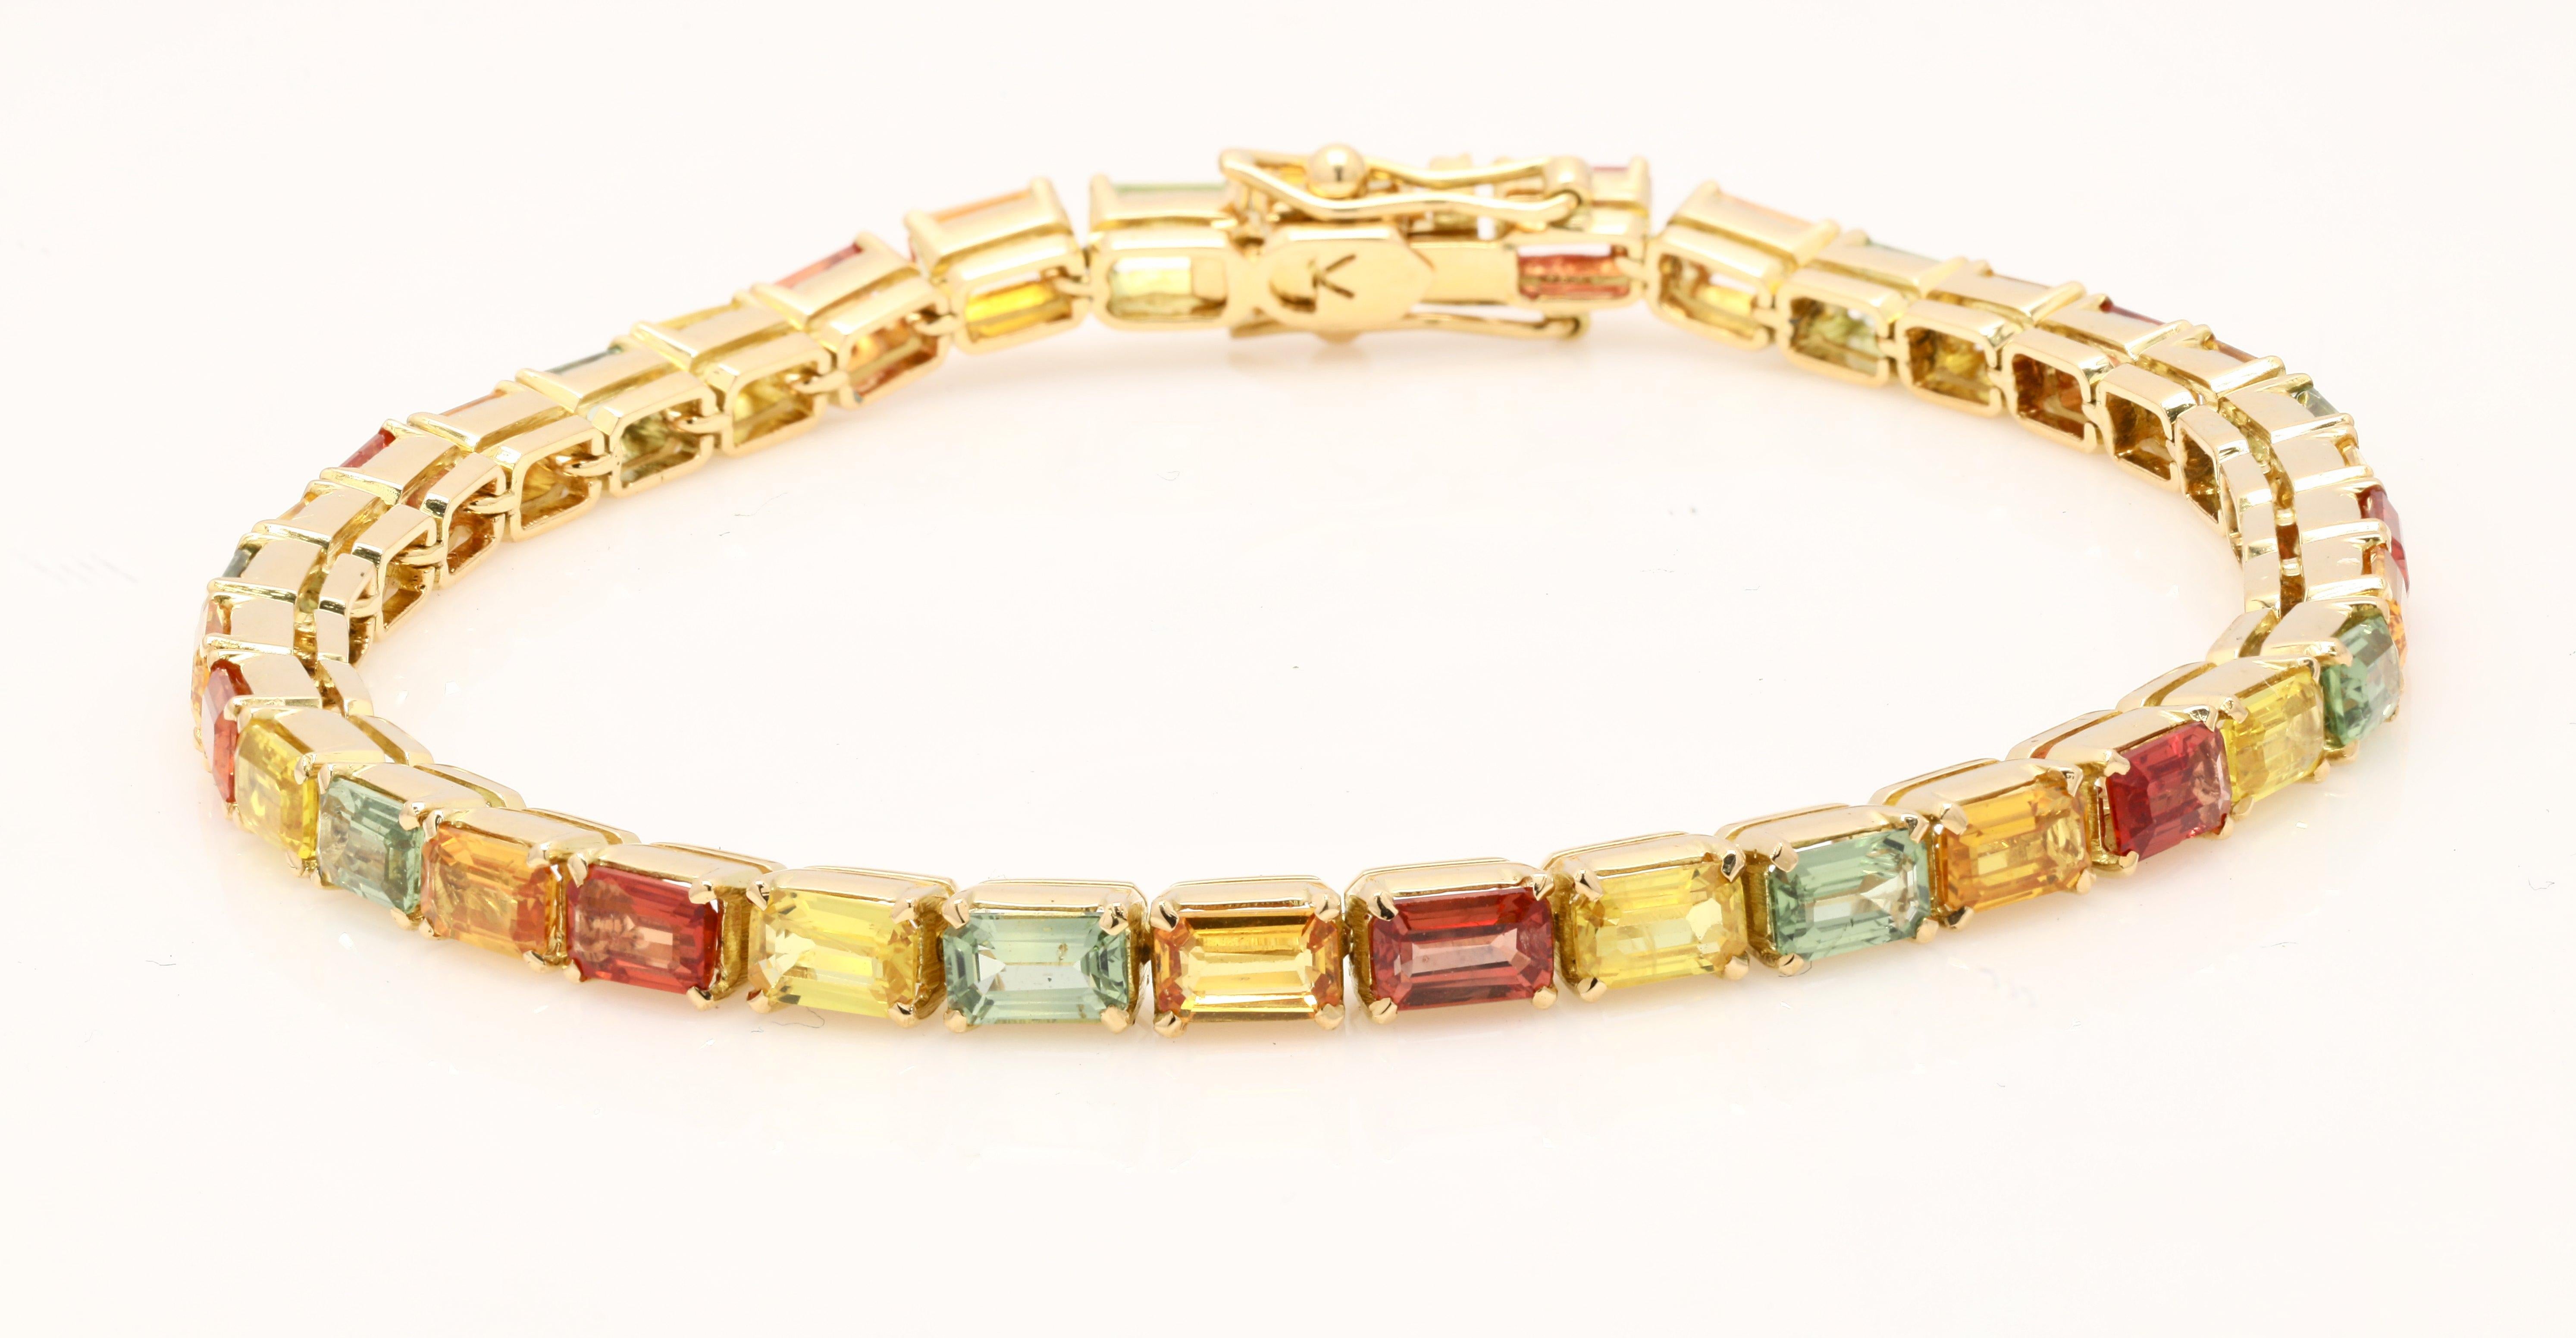 12.5ct 18ct rose gold tennis bracelet guaranteed g/h colour si purity natural diamonds